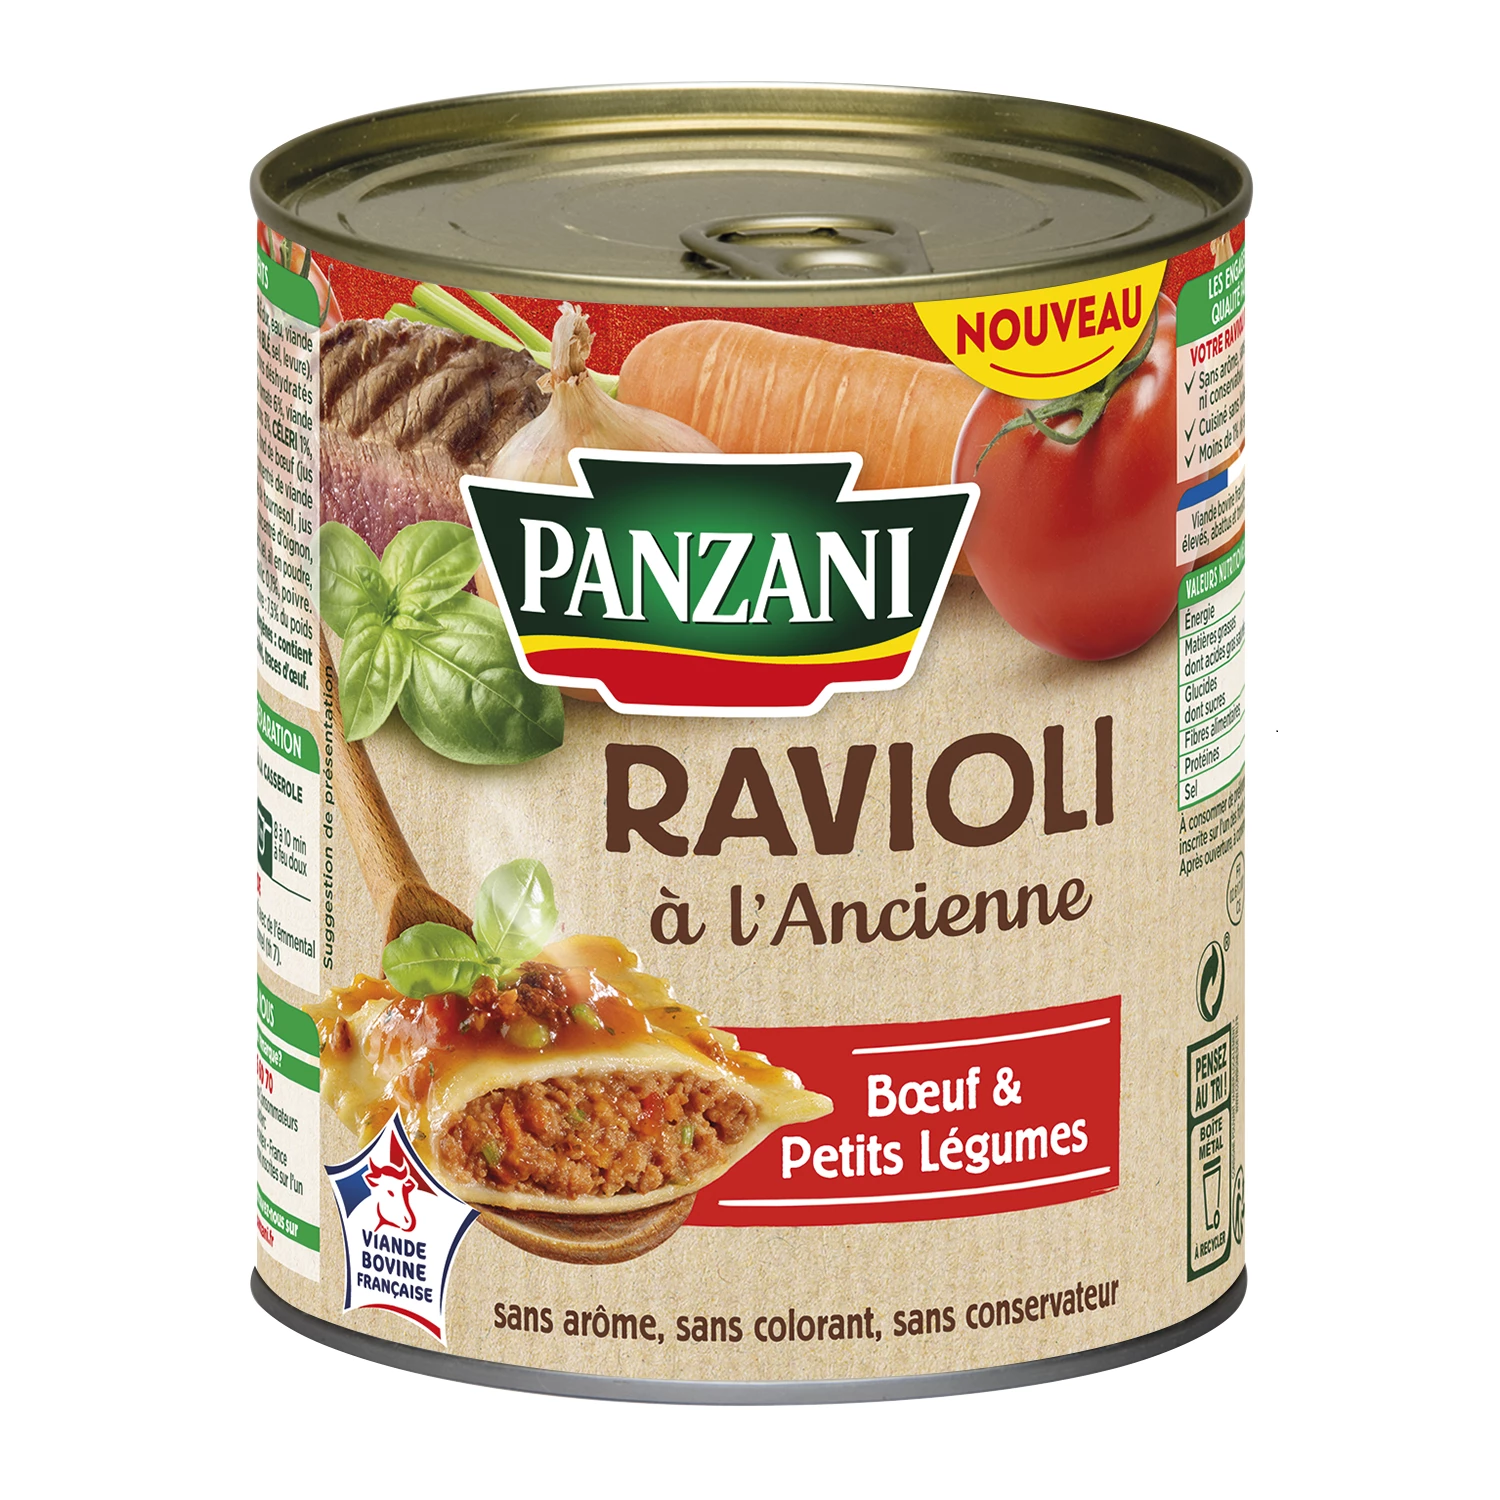 Ravioli Boeuf Petit Légumes, 800g - PANZANI